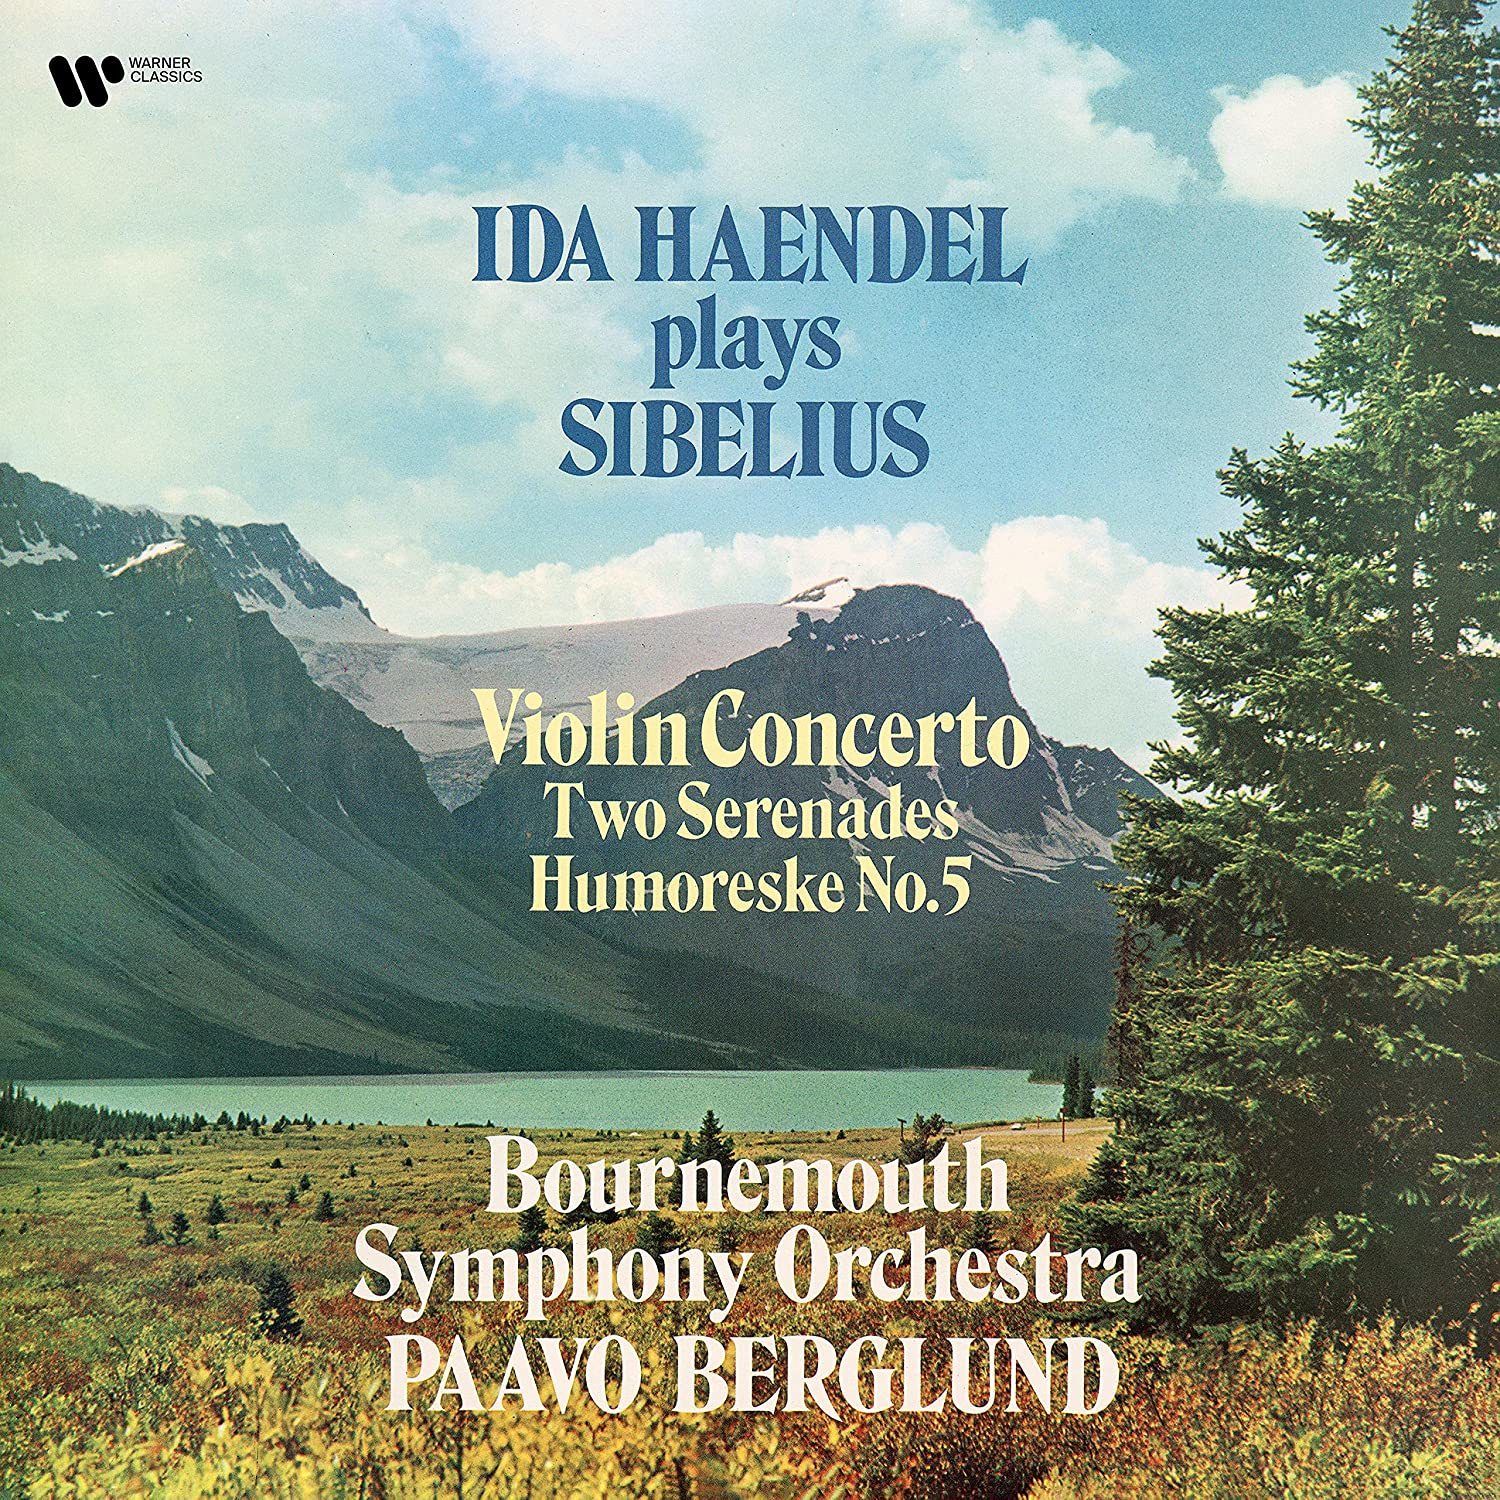 Виниловая пластинка Ida Haendel, Paavo Berglund/Bournemouth Orchestra, Sibelius: Violin Concerto, 2 Serenades, Humoreske No. 5 (0190296733819) tchaikovsky dvorak string serenades paavo berglund